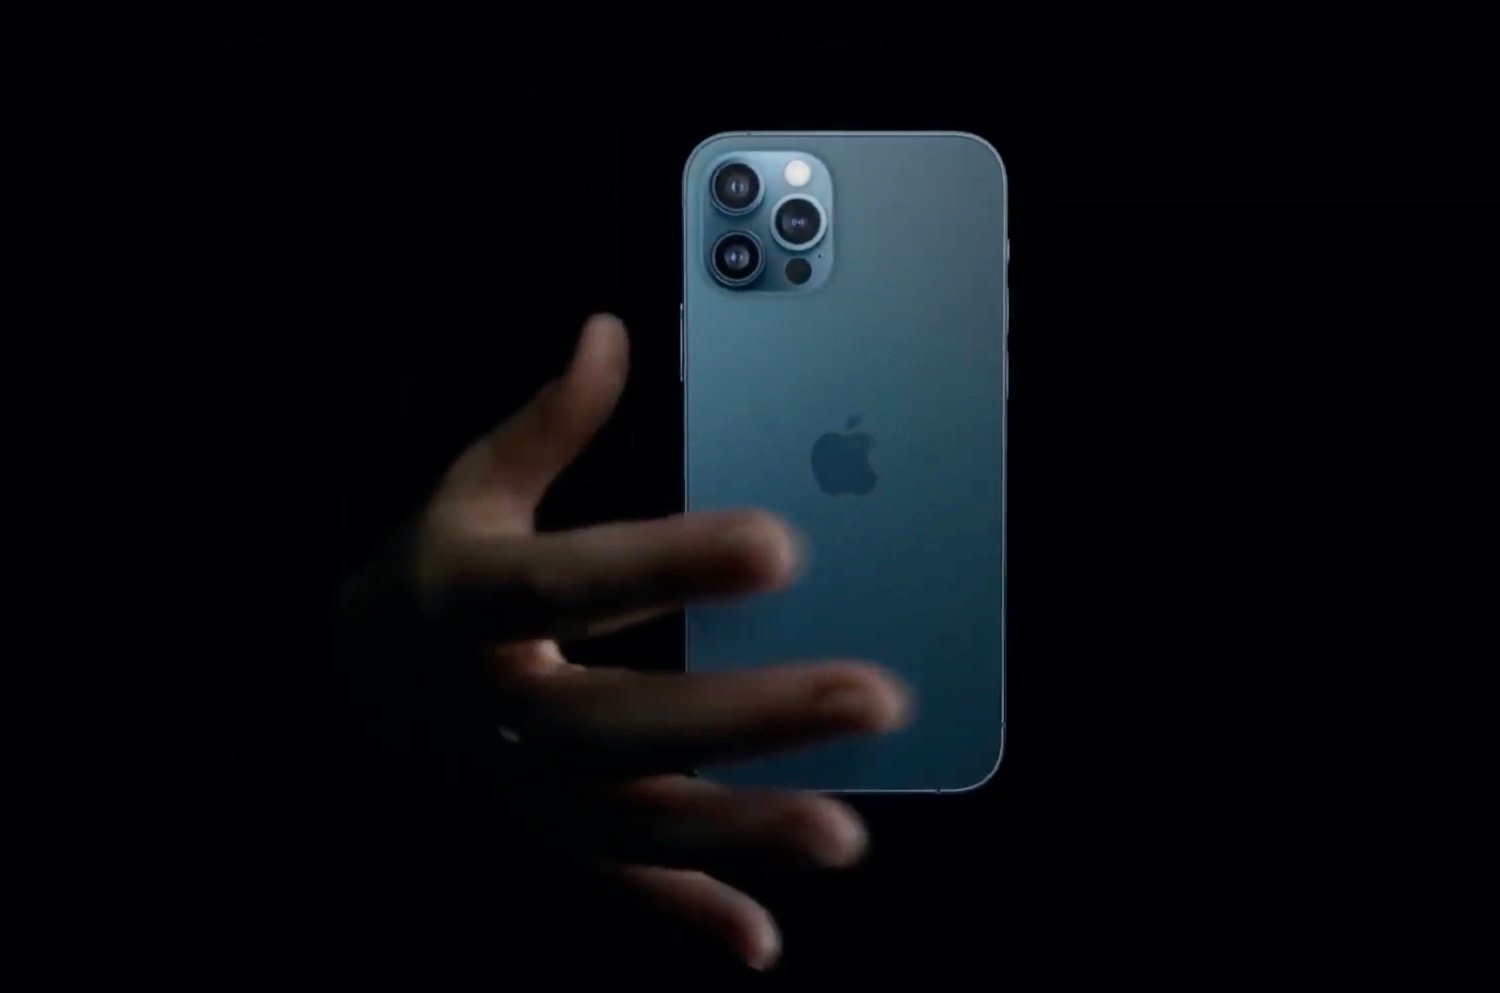 Apples 15 Watt MagSafe-Ladegerät lädt das iPhone 12 überraschend